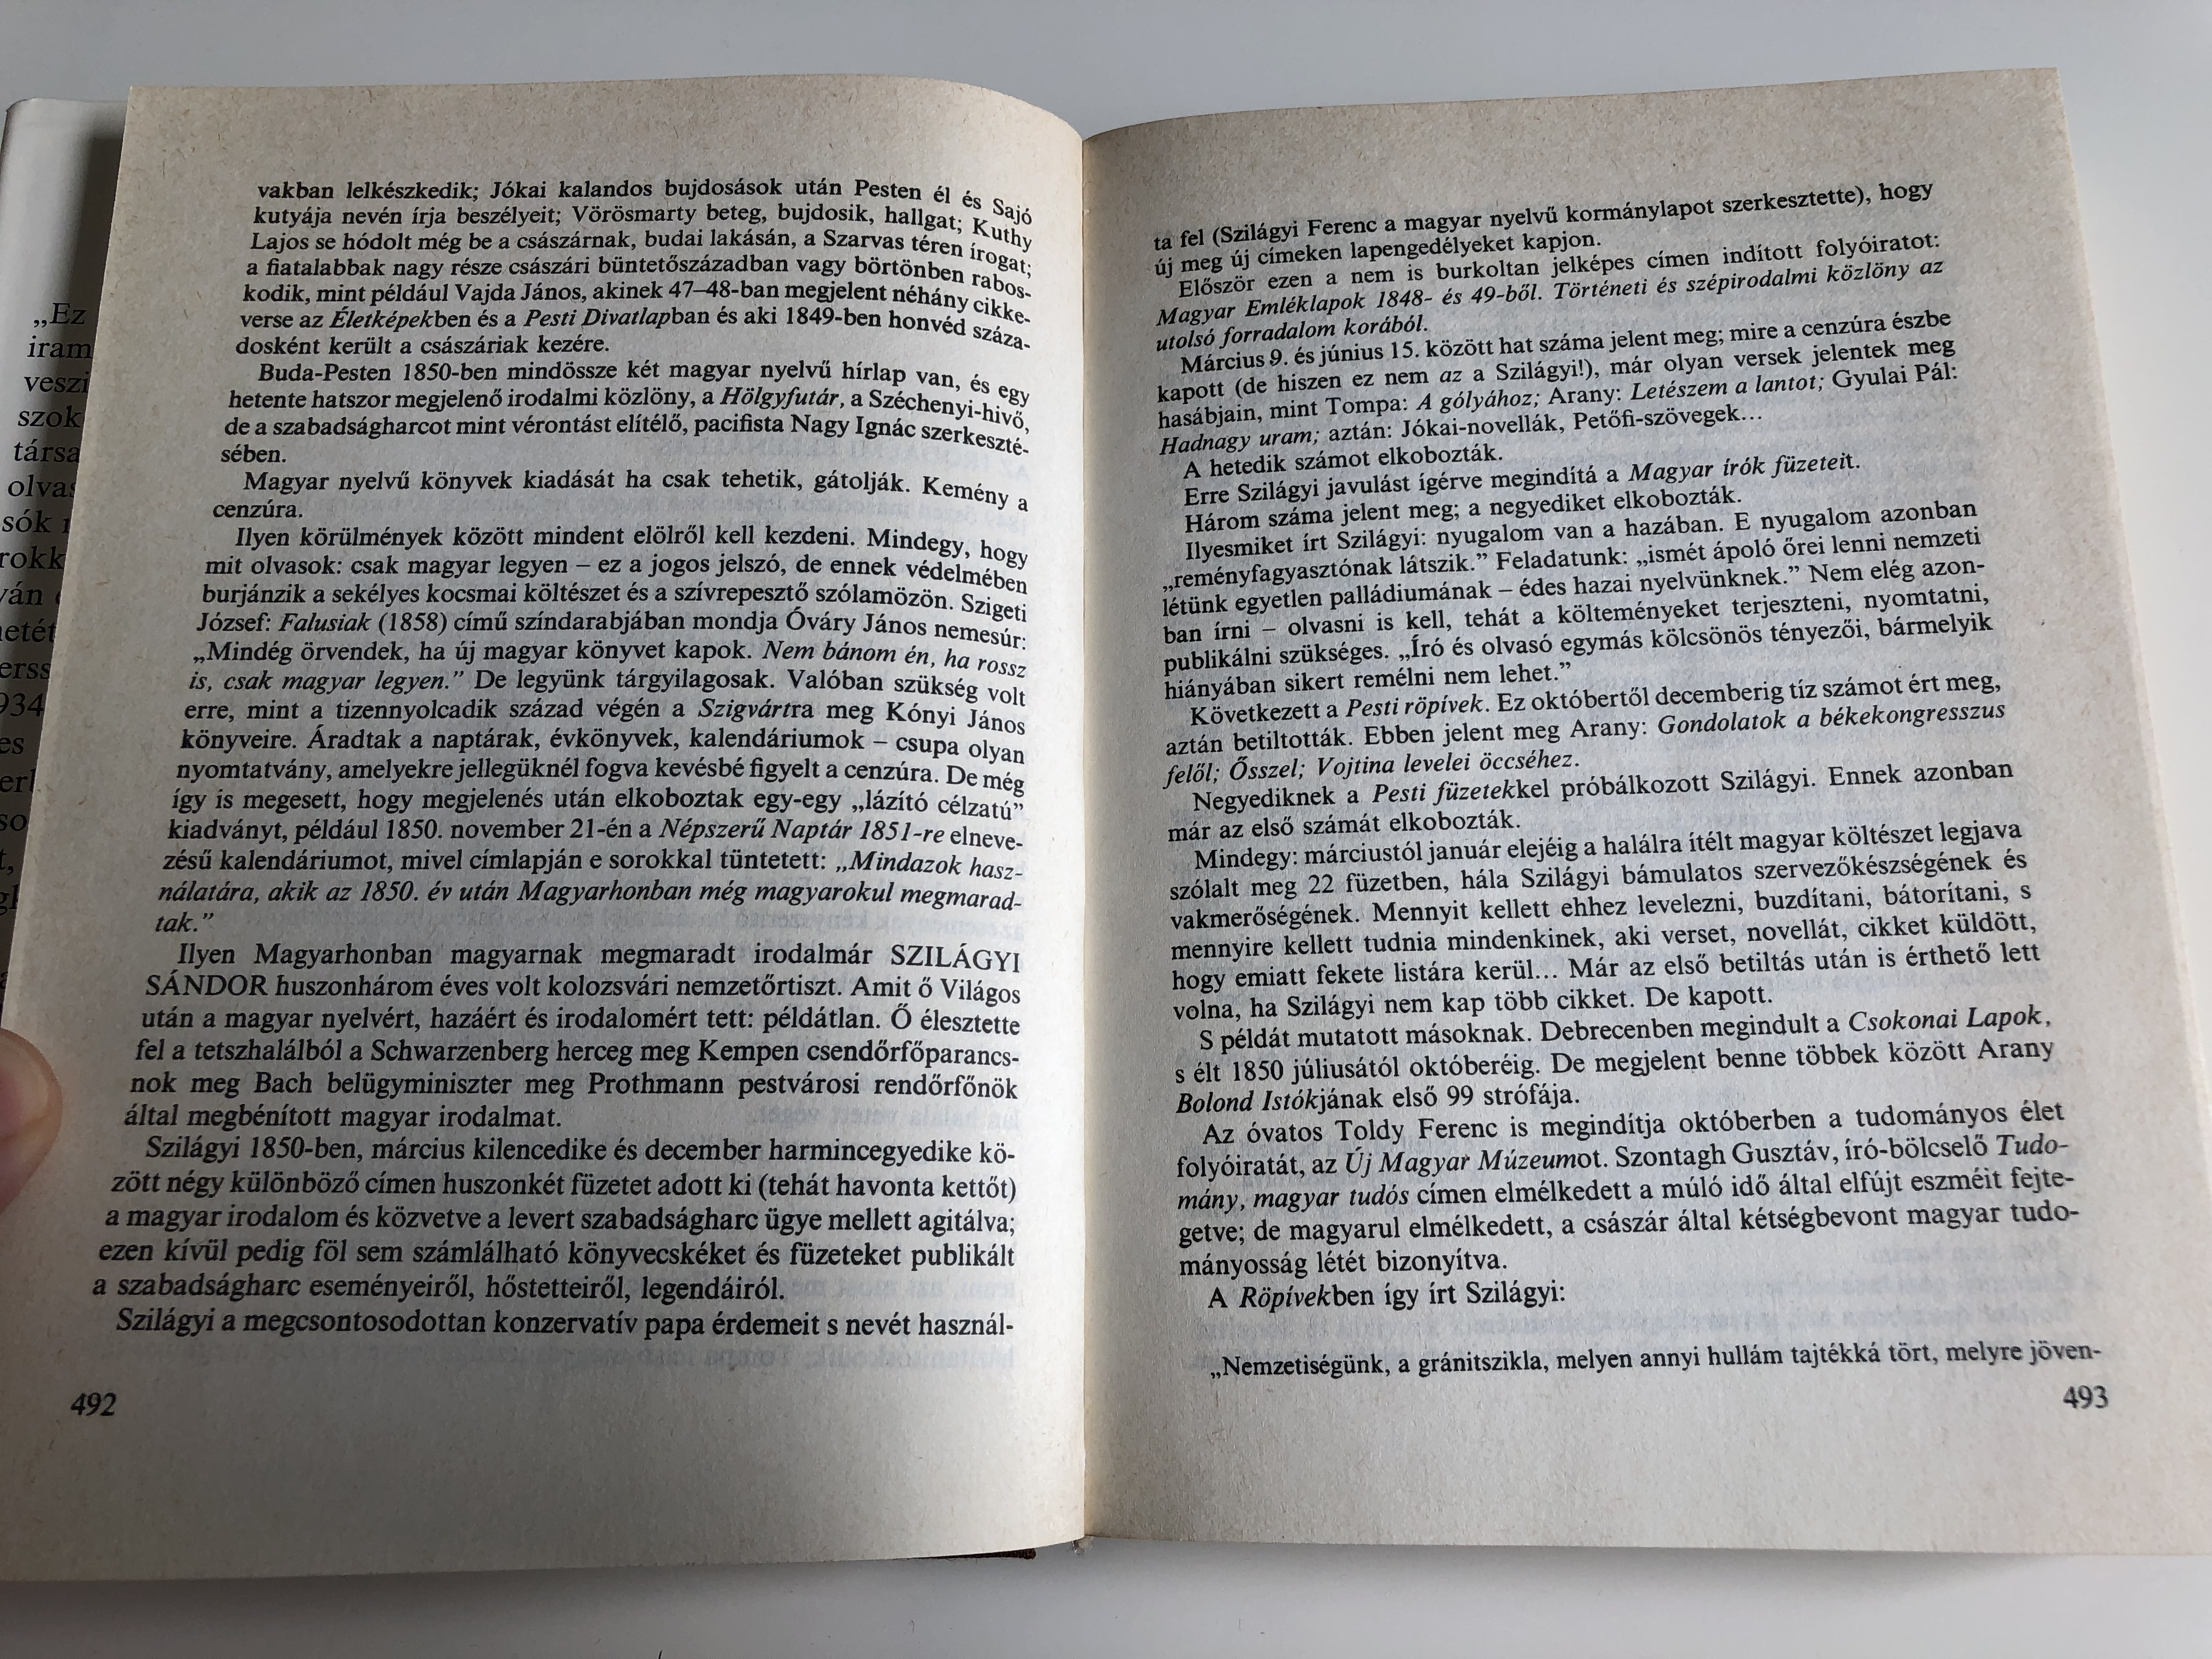 di-k-rj-magyar-neket-2-by-nemesk-rty-istv-n-a-magyar-irodalom-t-rt-nete-1945-ig-history-of-hungarian-literature-up-to-1945-volume-ii.-gondolat-1983-6-.jpg